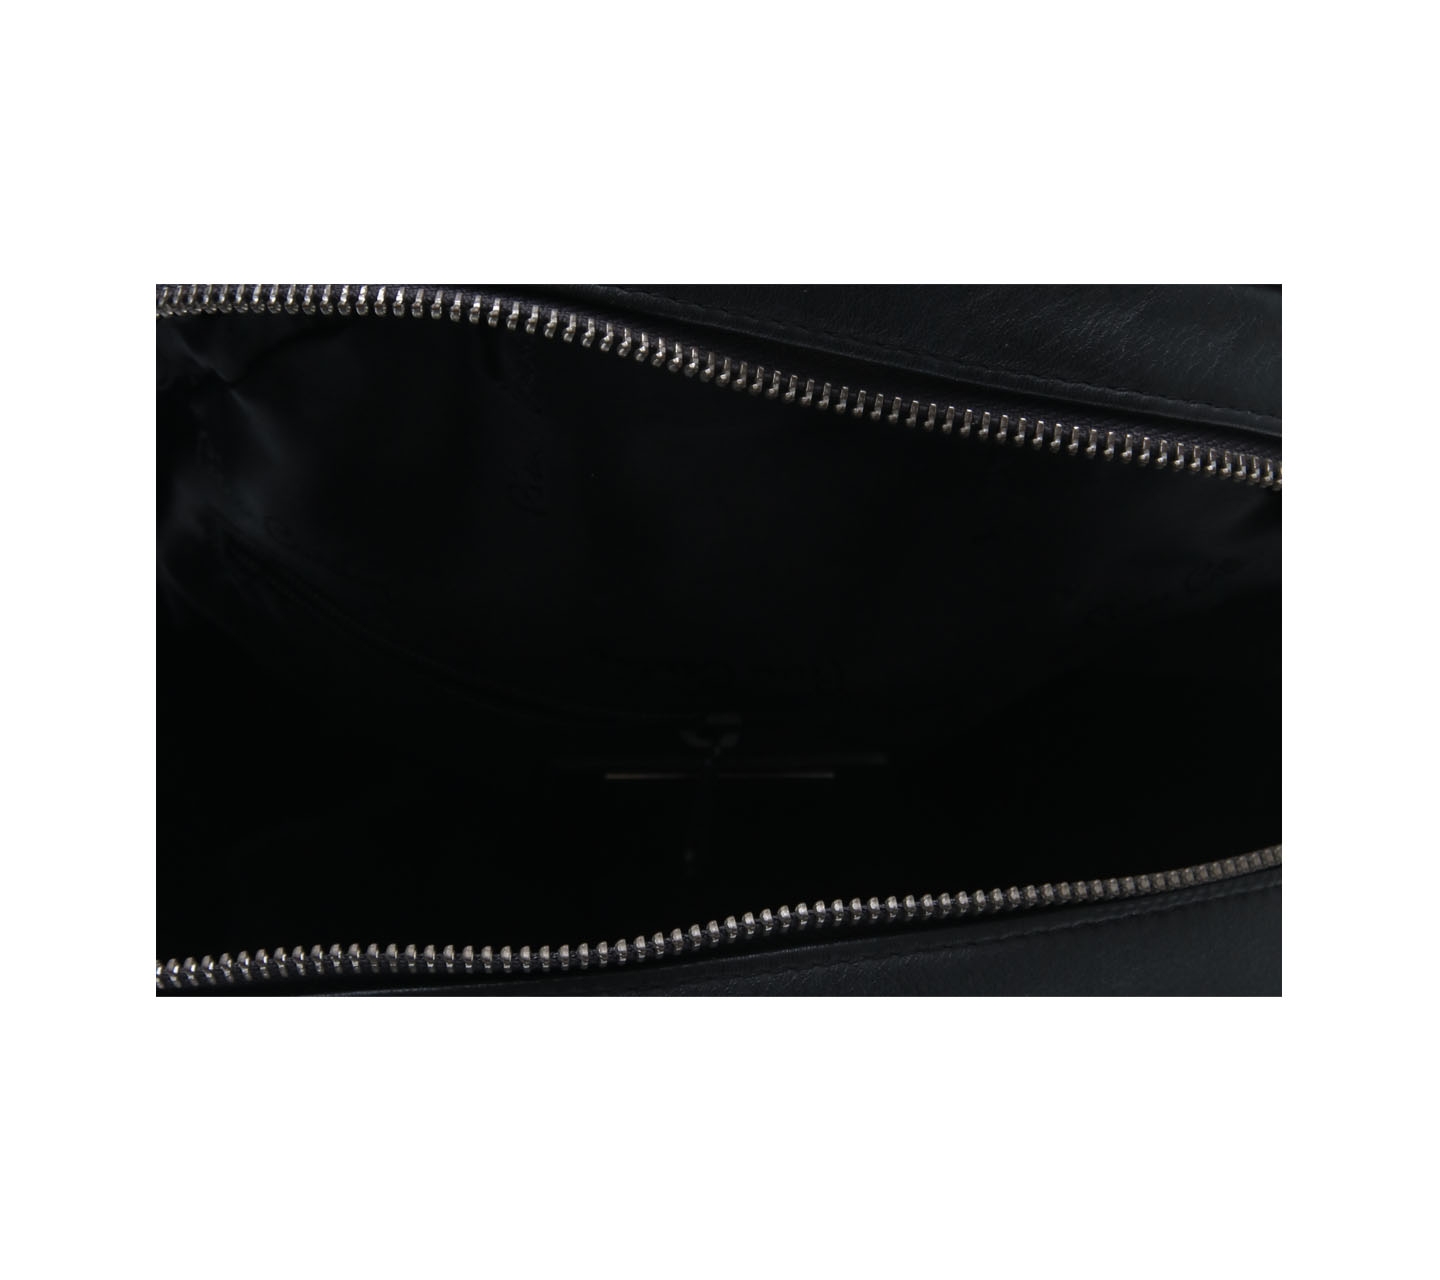 Pierre Cardin Black Leather Backpack